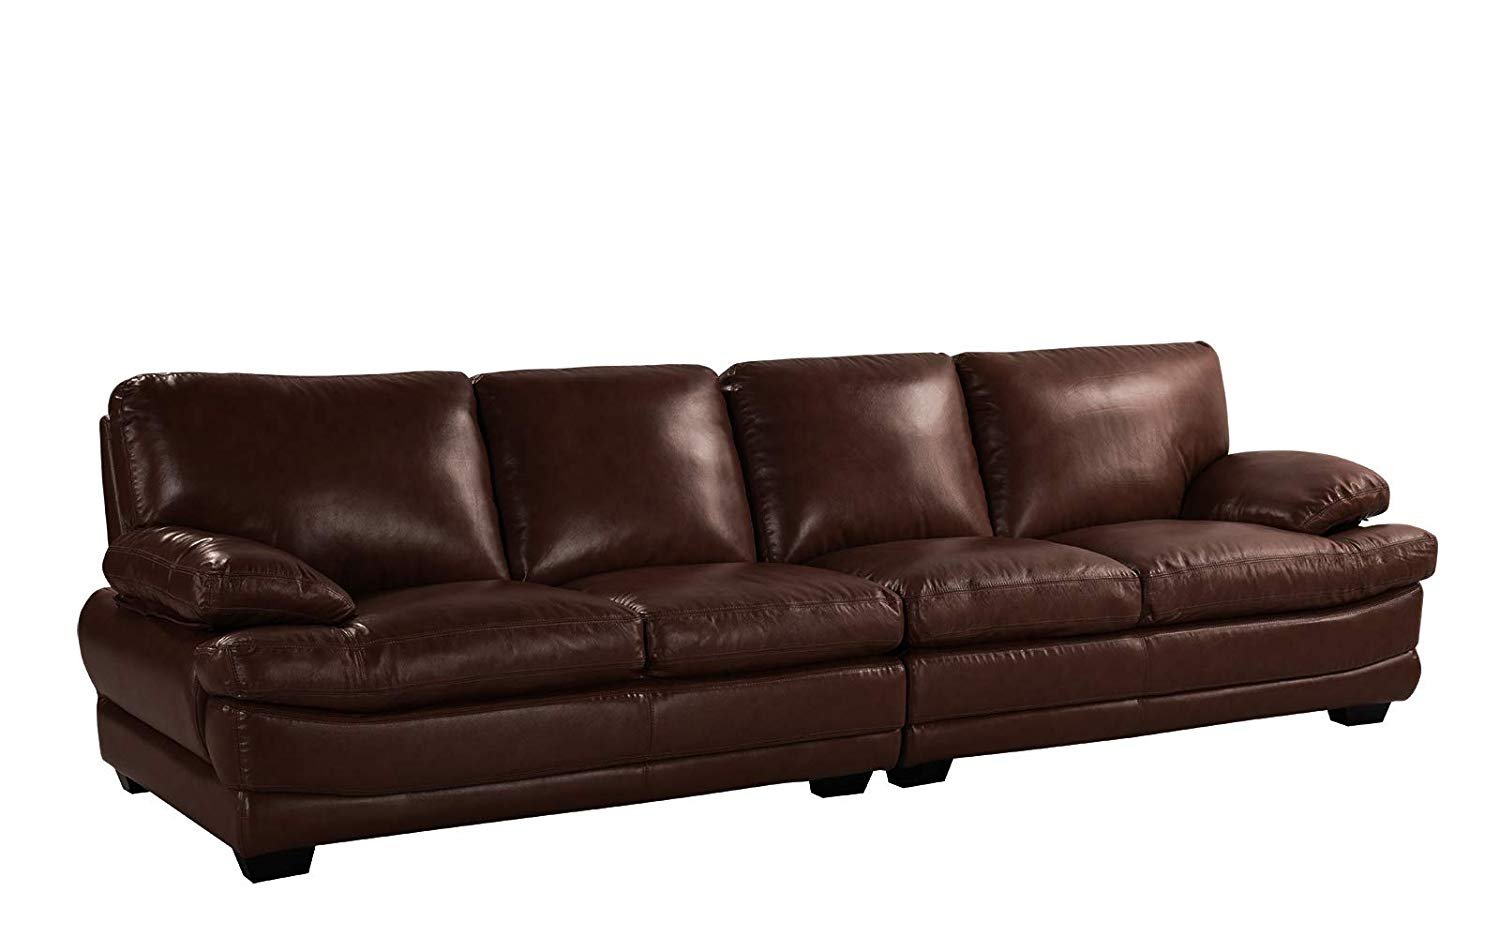 182 cm wide leather sofa